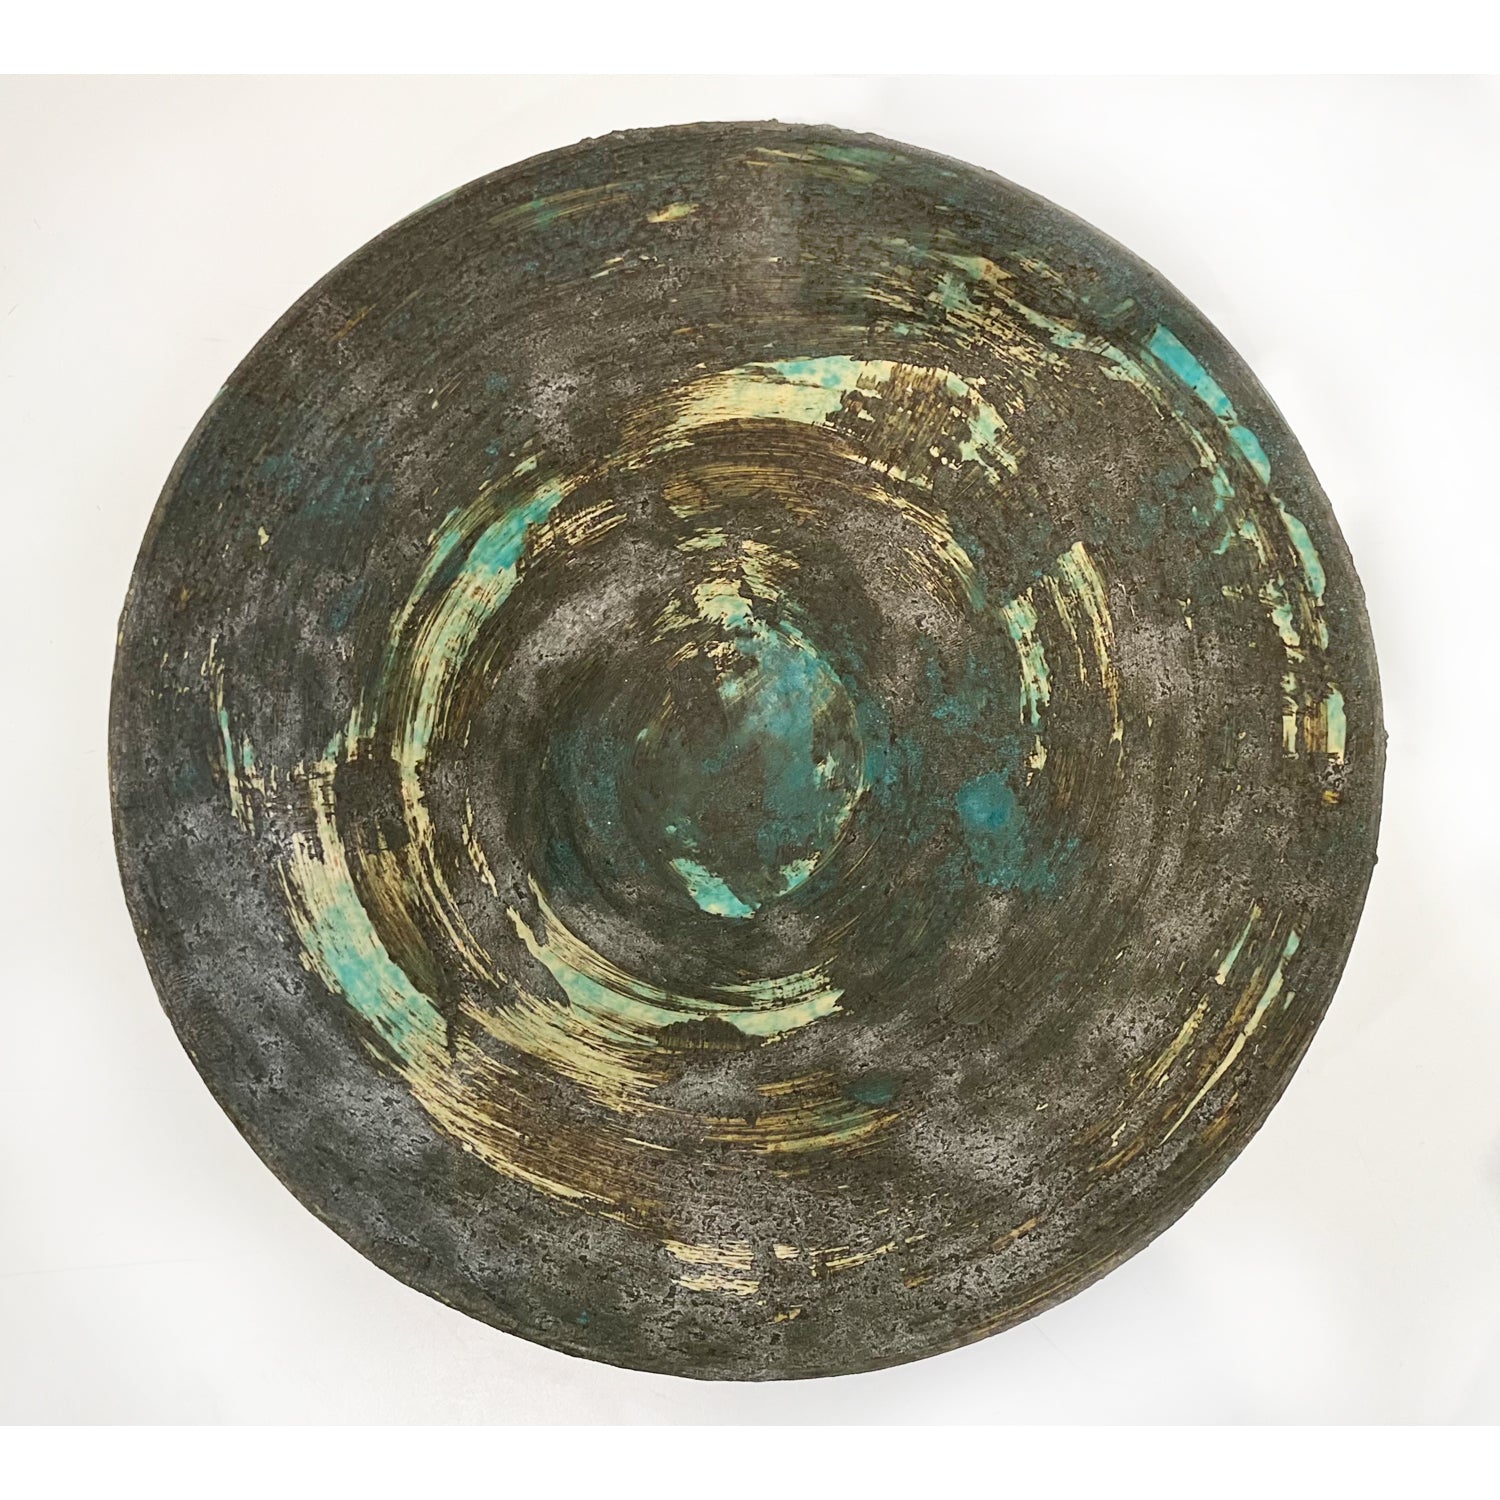 Makiko Hicher - Turquoise Black Bowl, 6" x 13.5" x 13.5"